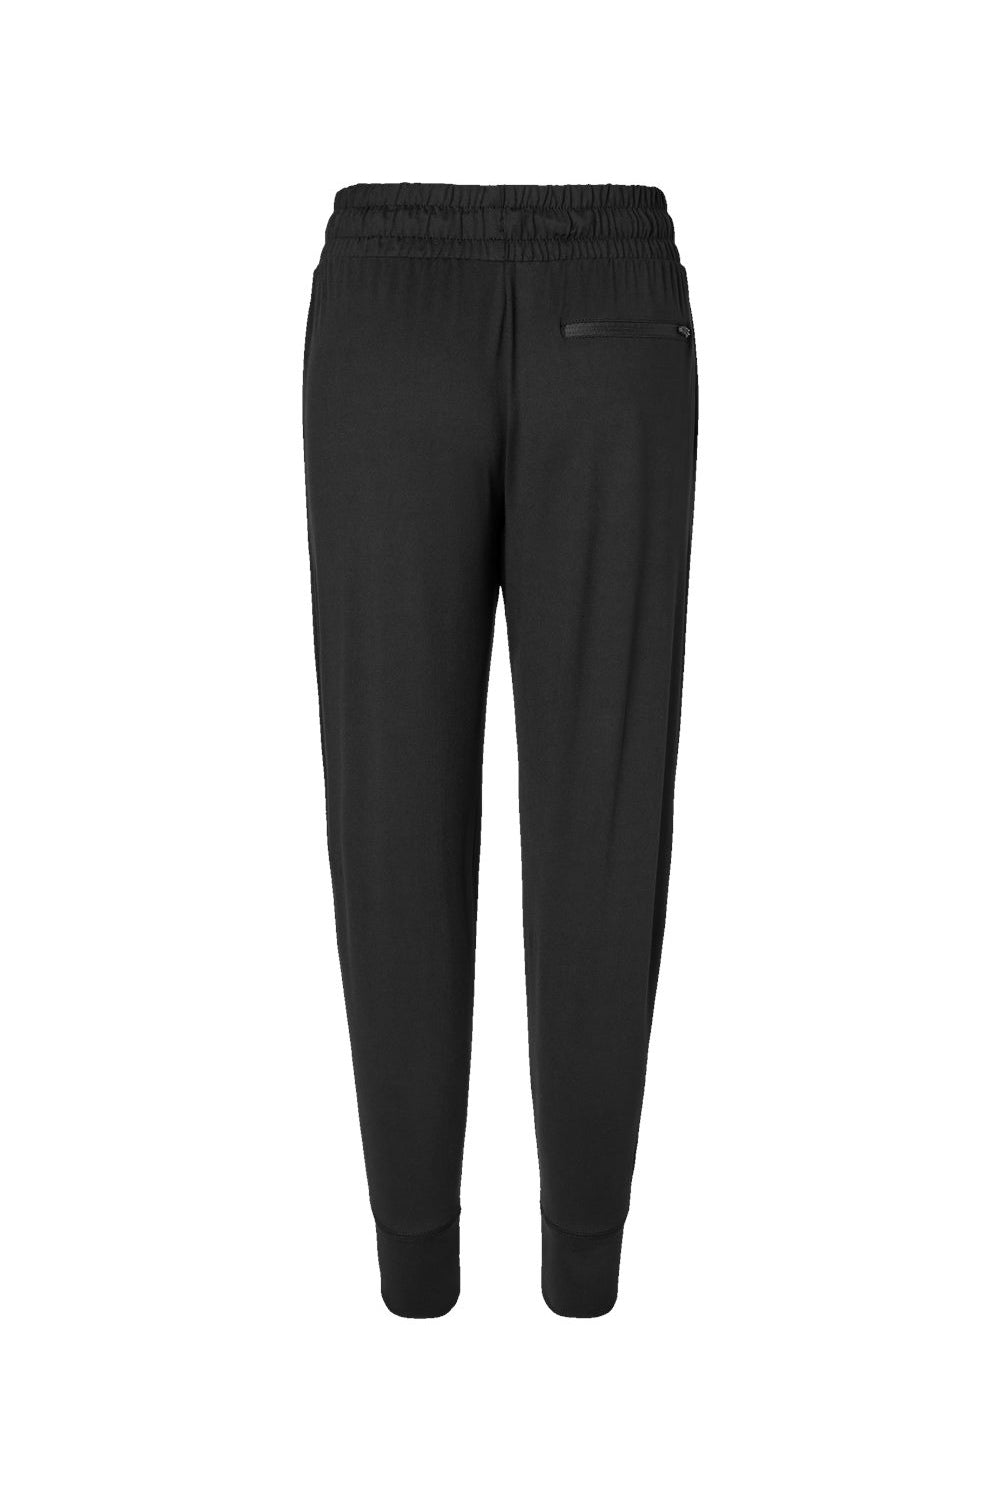 Holloway 222799 Womens Eco Revive Ventura Jogger Sweatpants w/ Pockets Black Flat Back